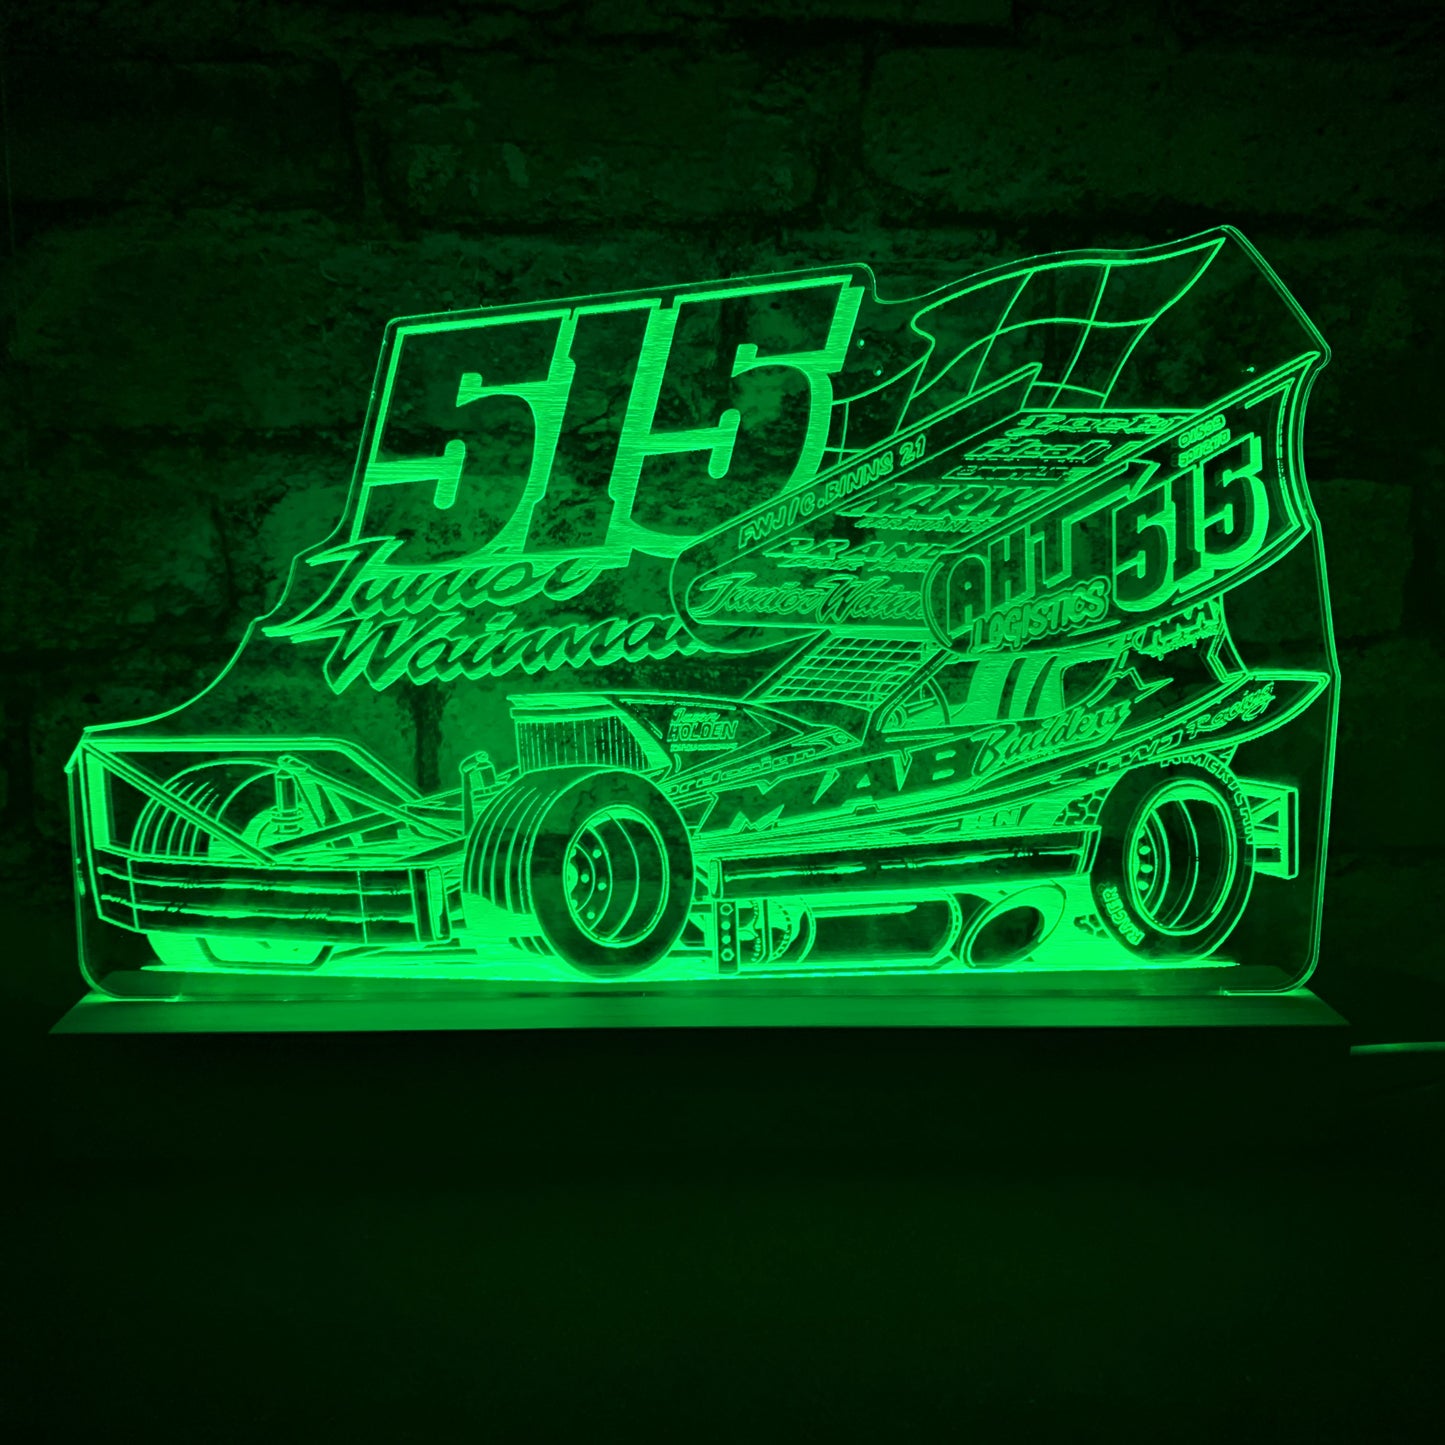 Frankie Wainman Jnr 515 Brisca F1 Night Light - Large Wooden Base - Night Light - Stock Car & Banger Toy Tracks